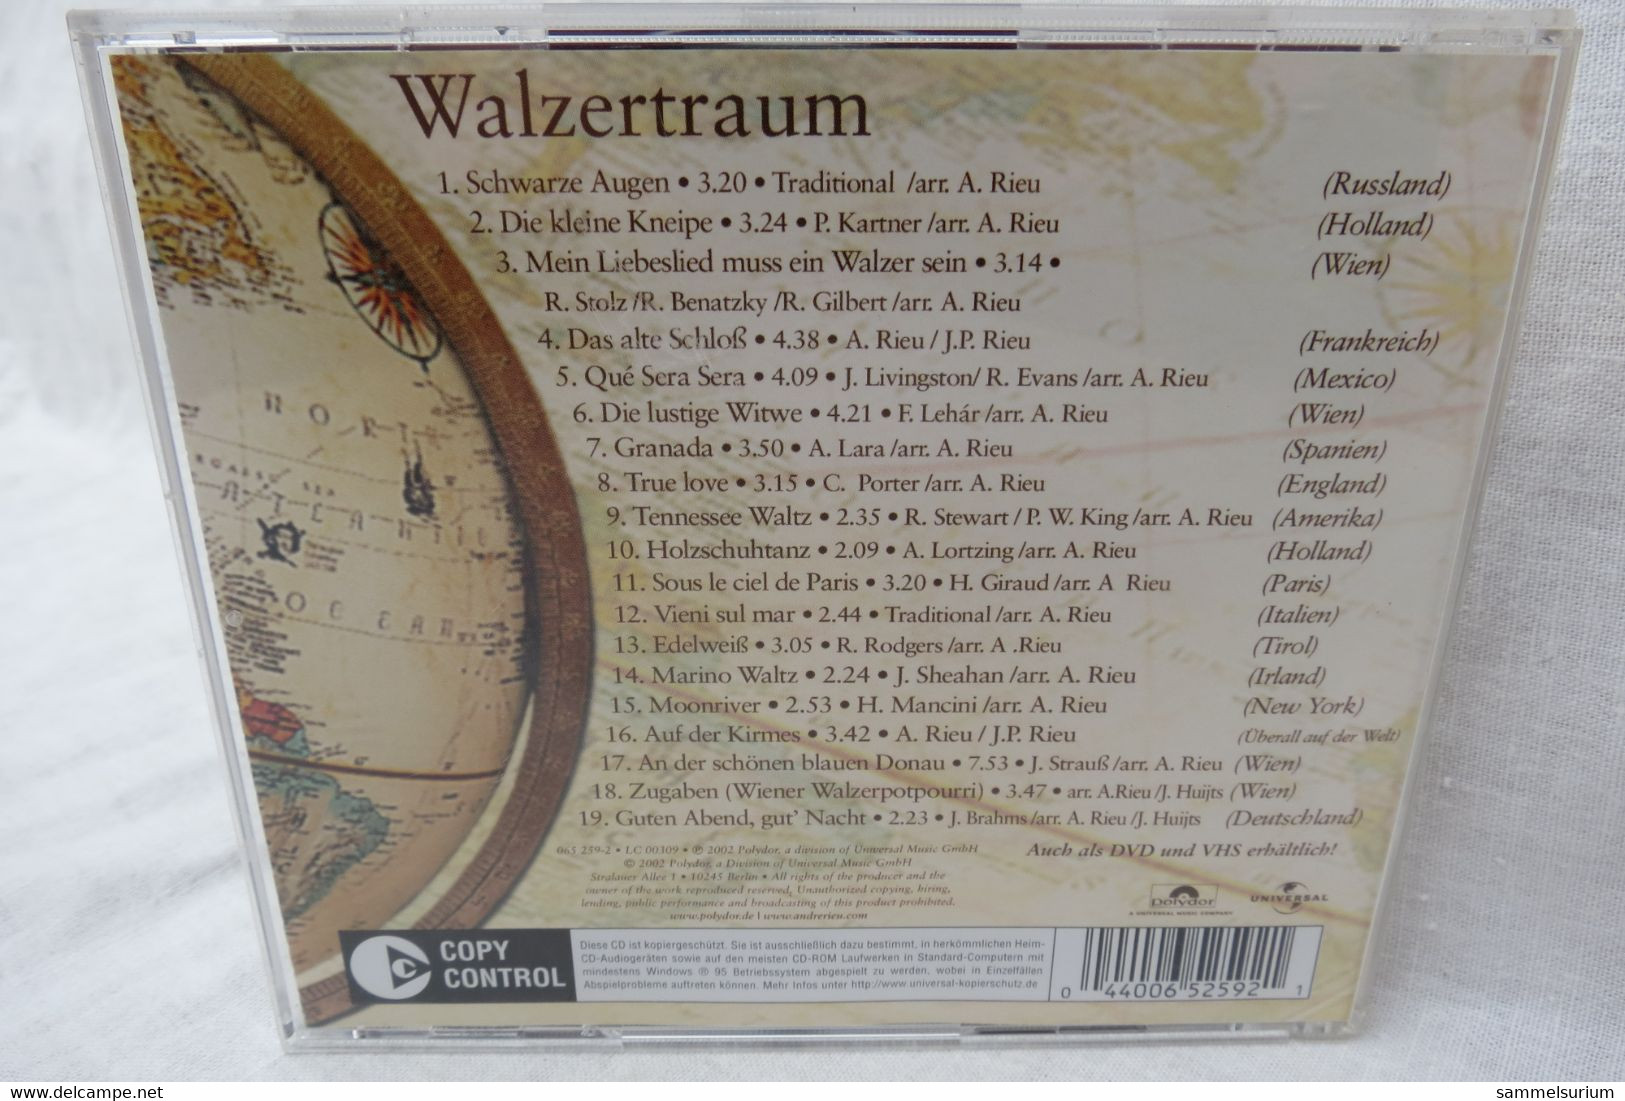 CD "André Rieu" Walzertraum - Instrumental